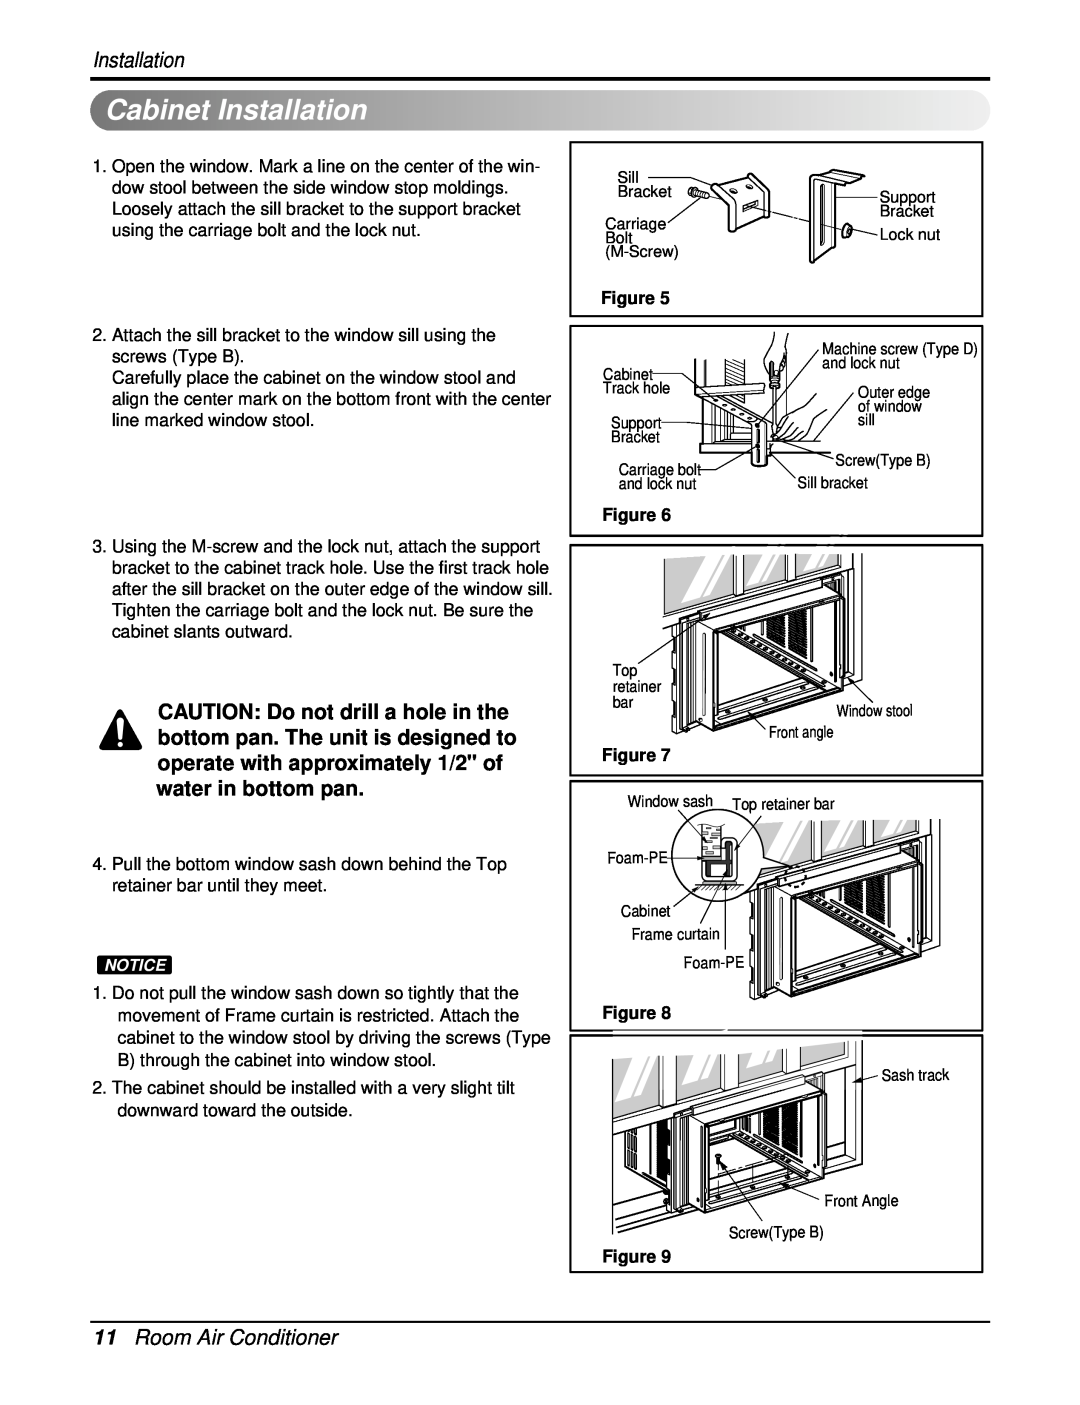 Heat Controller REG-243A, REG-183A manual CabinetInstallation, 11Room Air Conditioner 